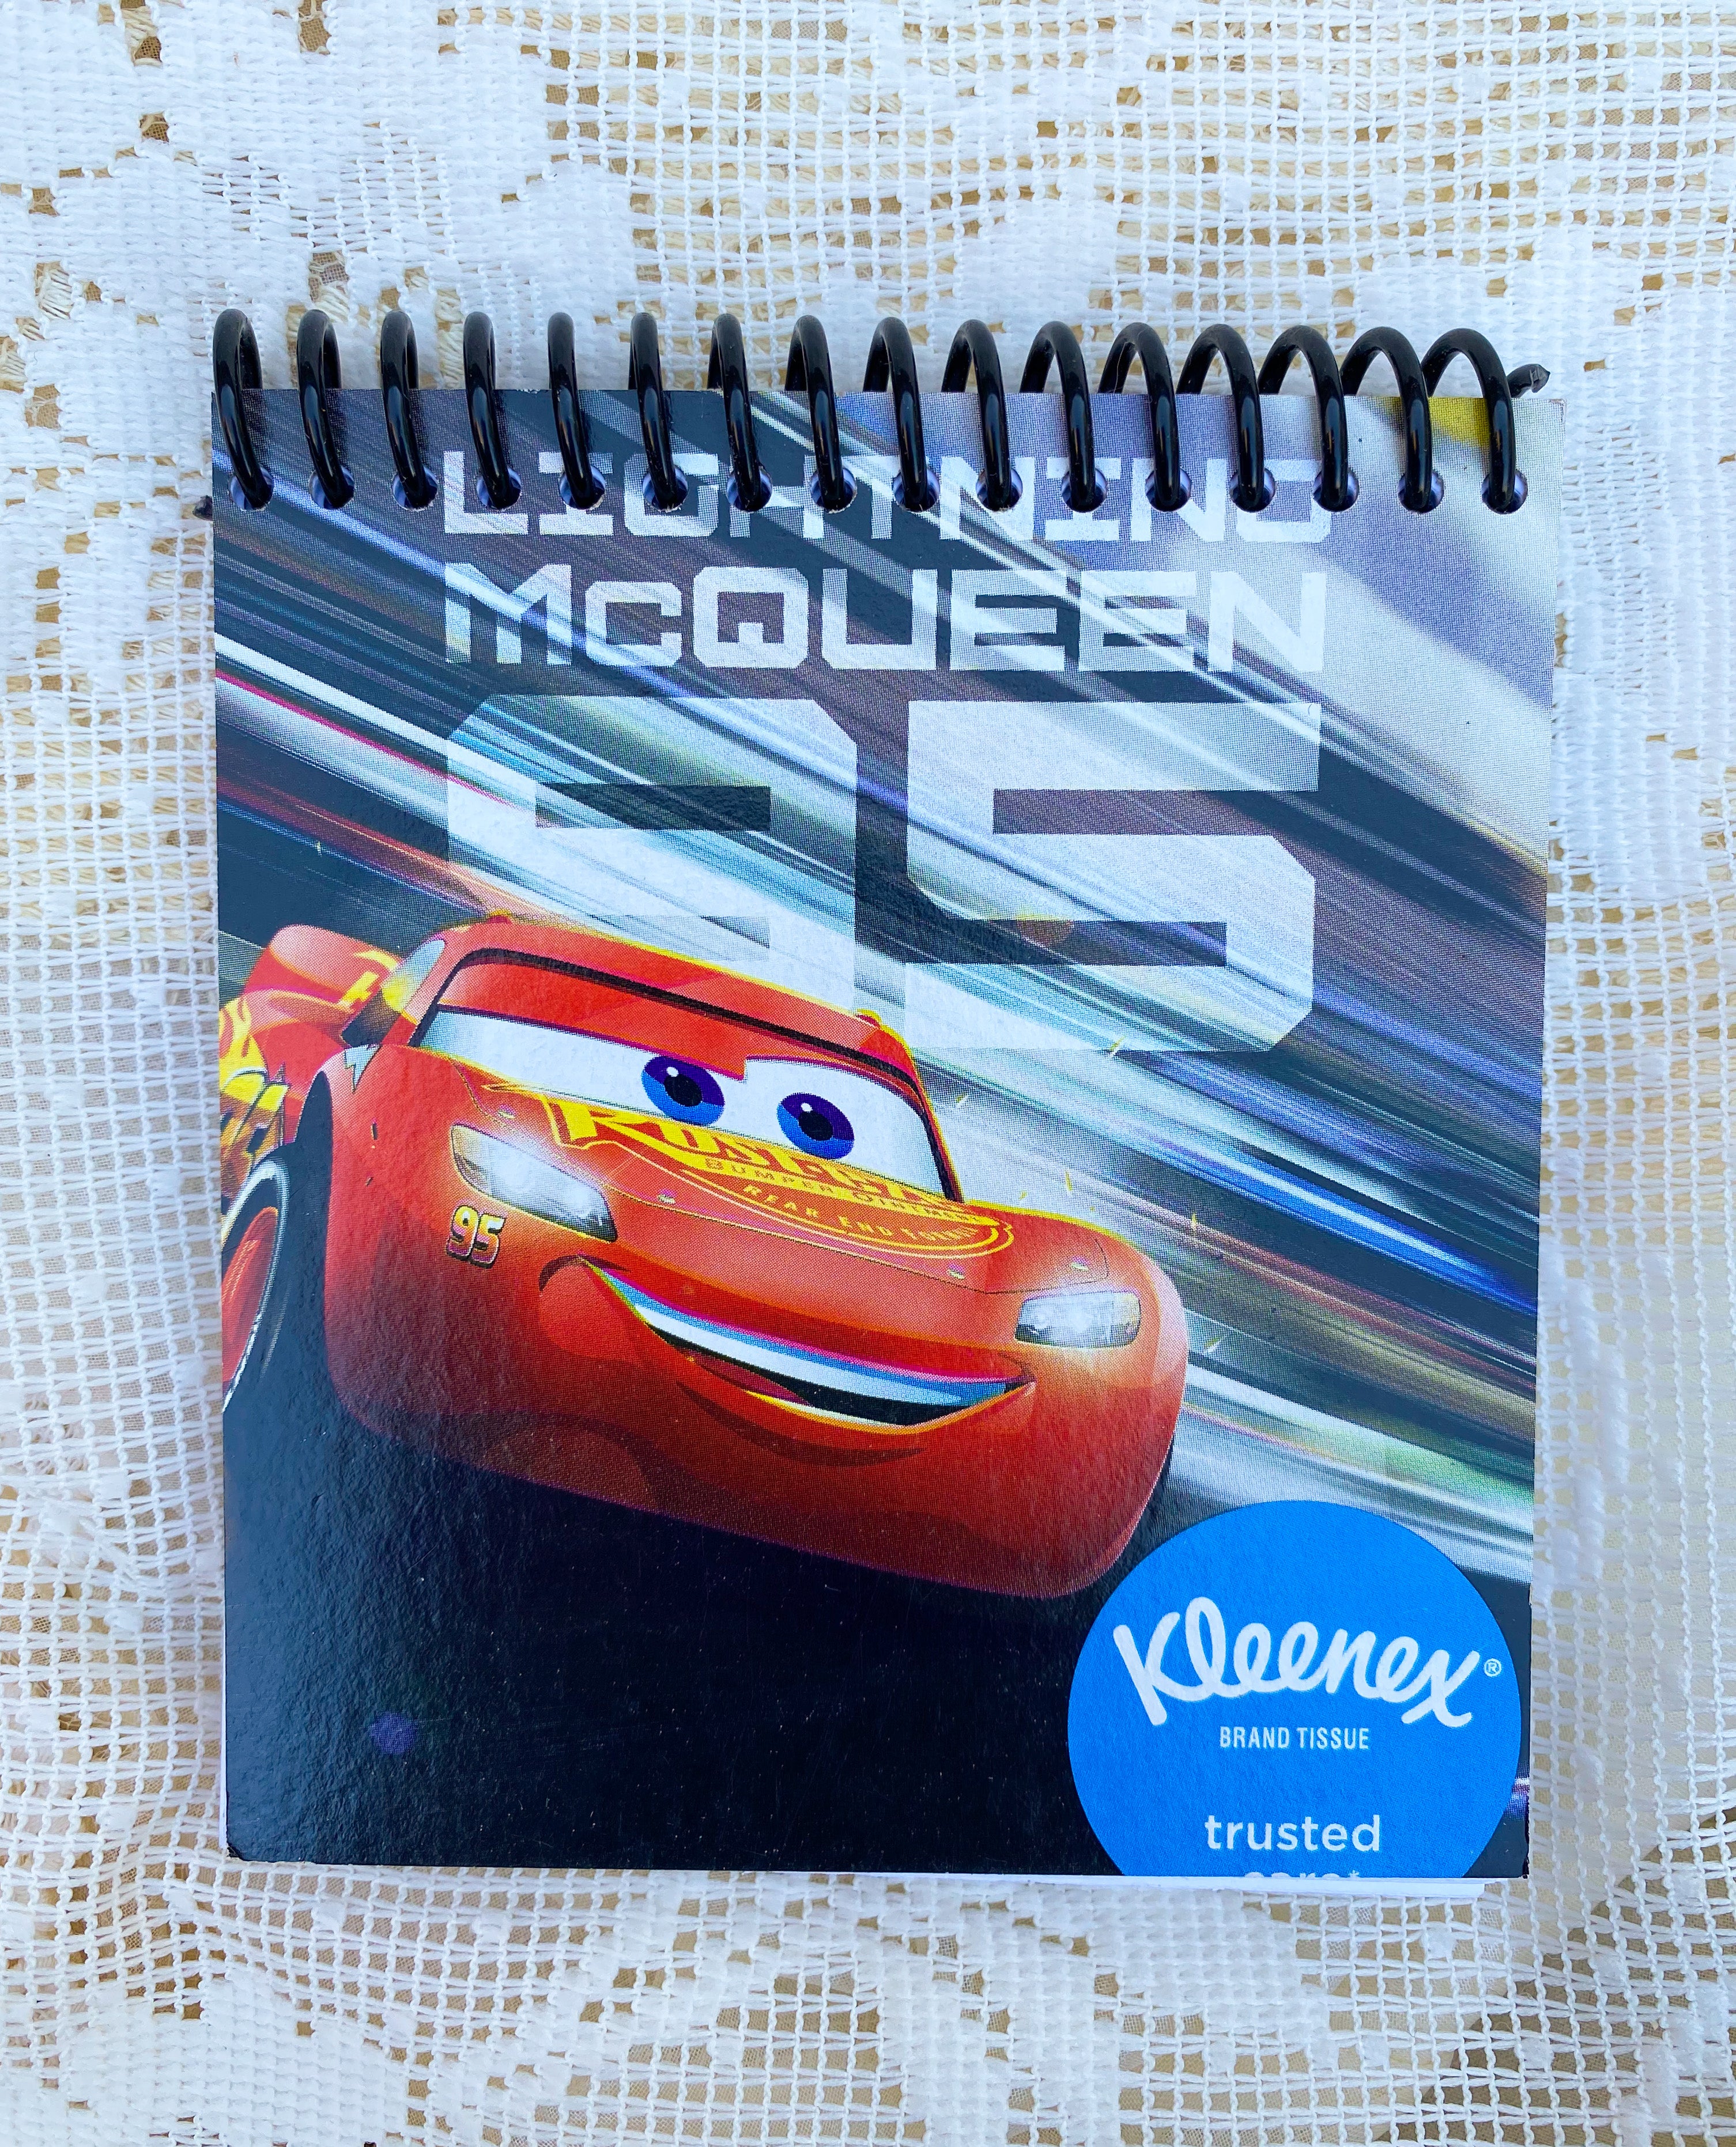 Disney Pixar’s Cars - Lightning McQueen Recycled Kleenex Box Notebook